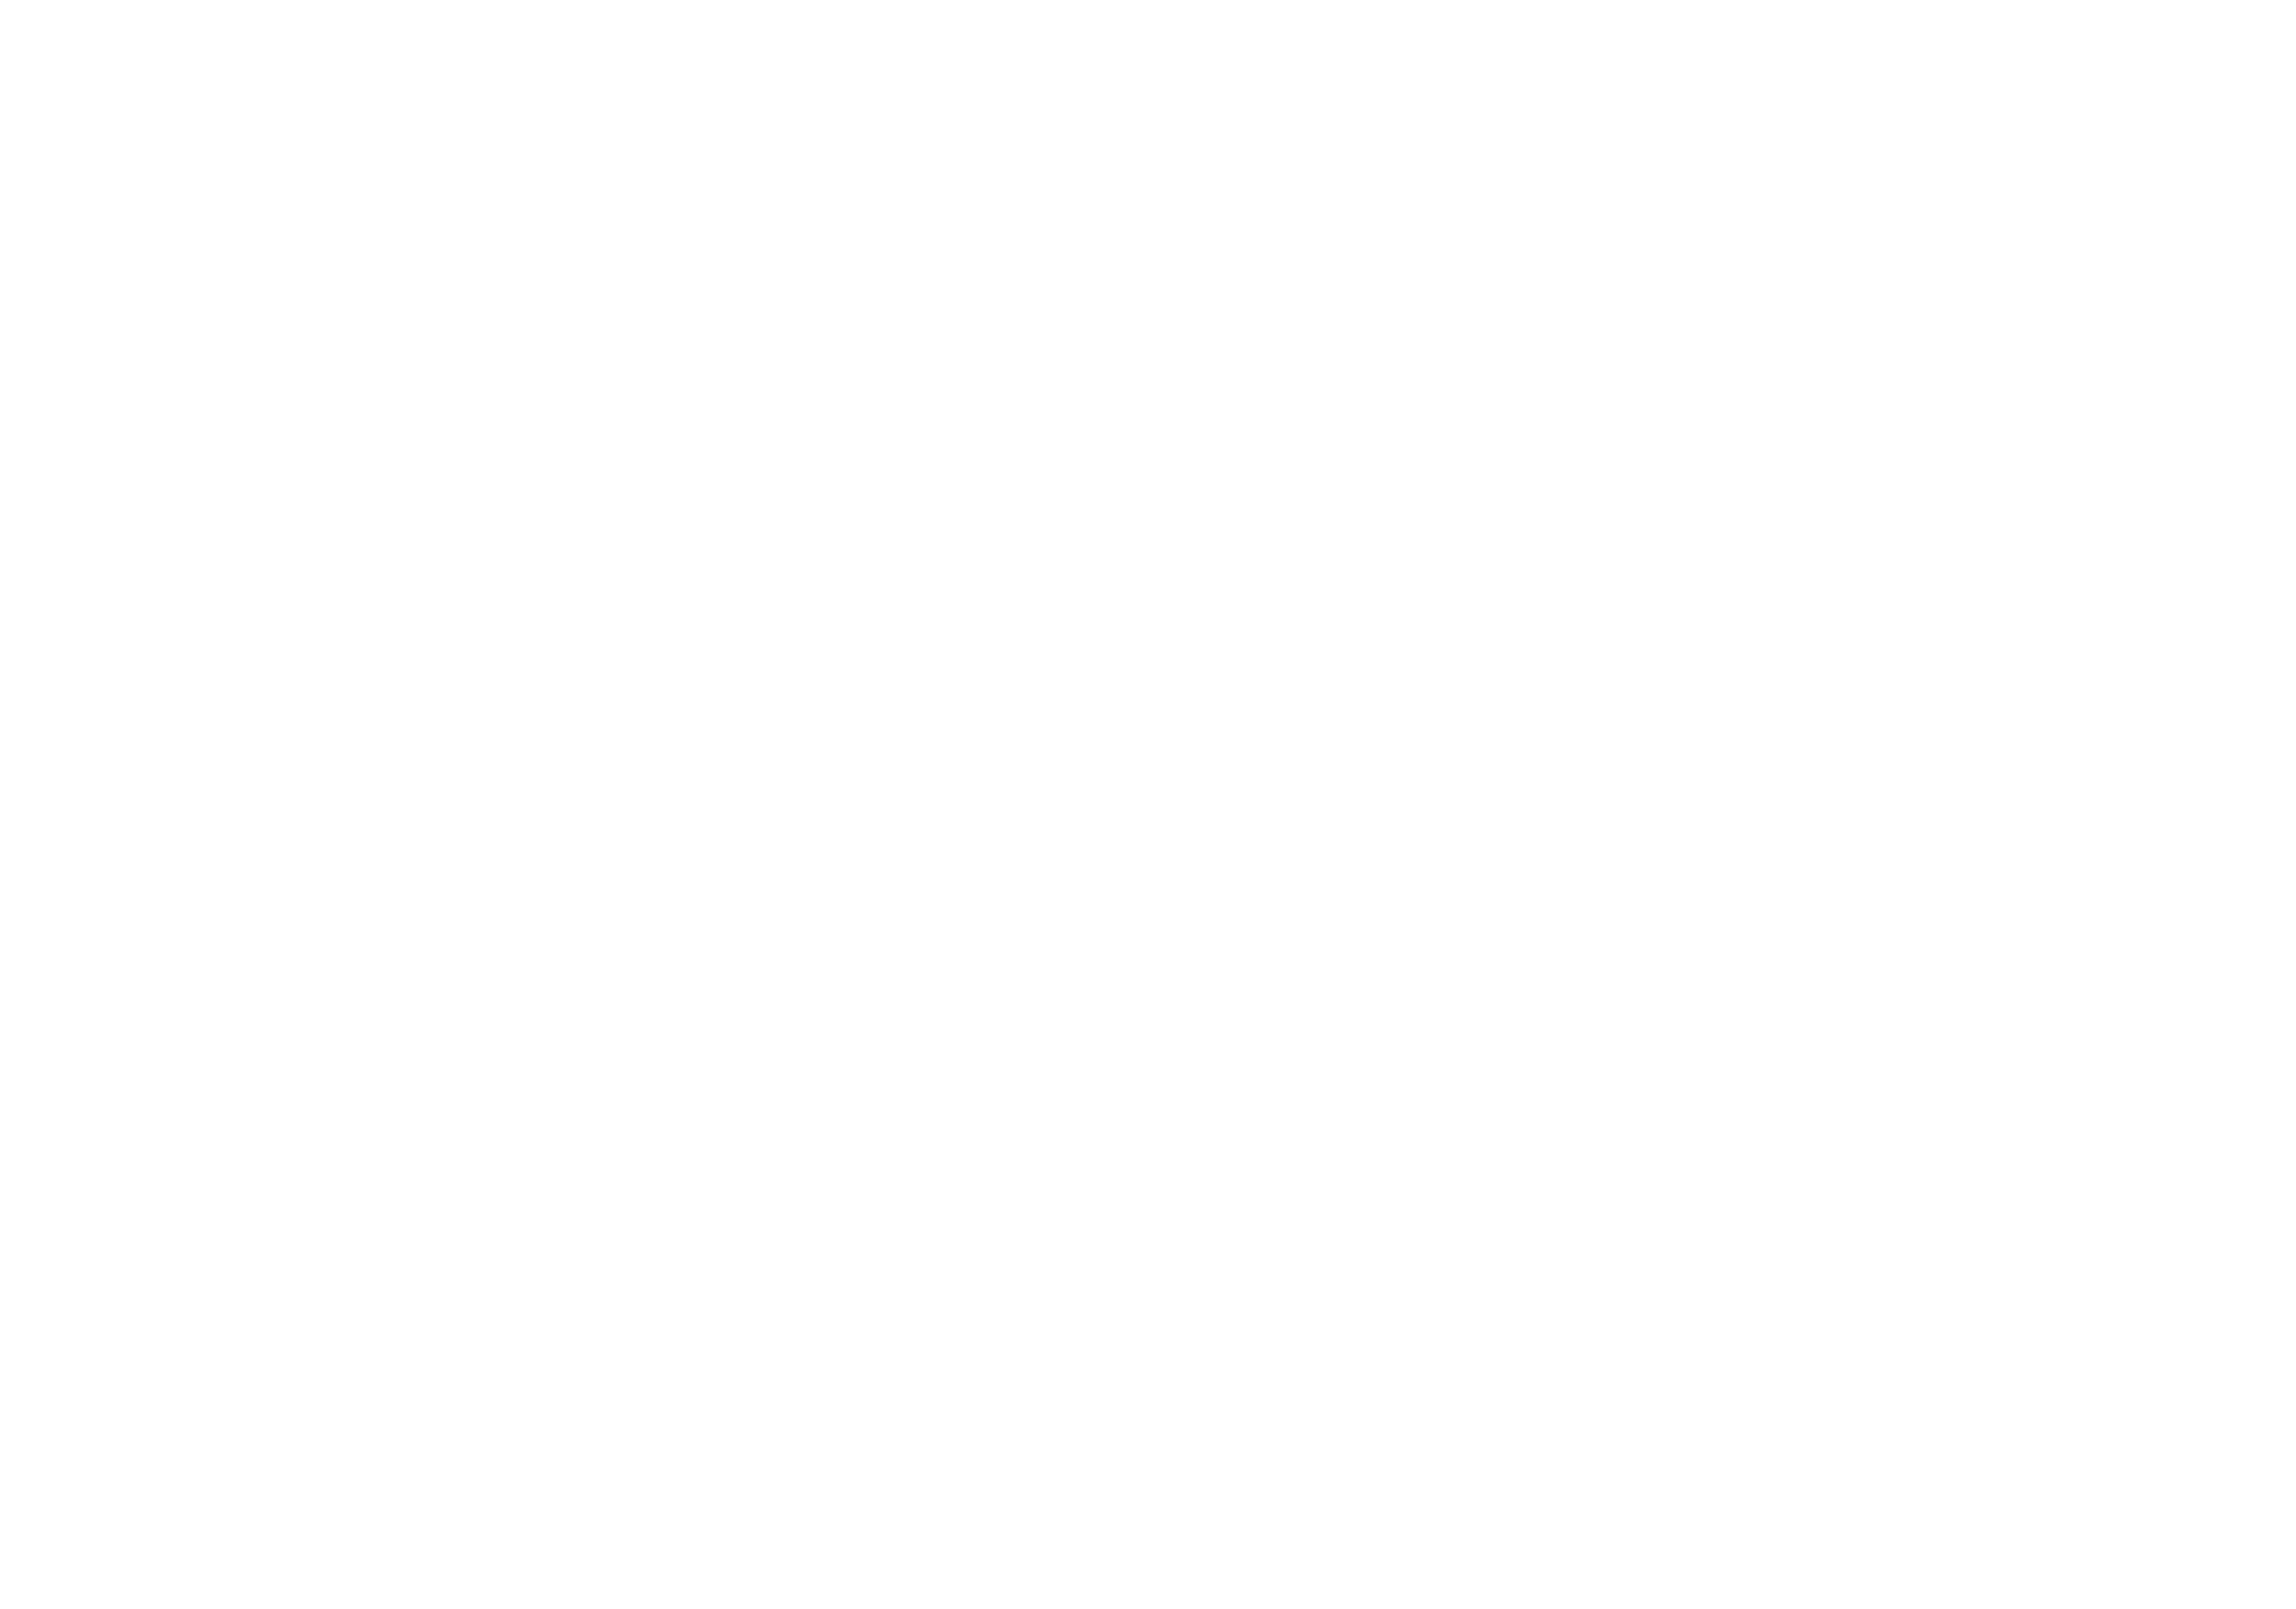 Laughcut